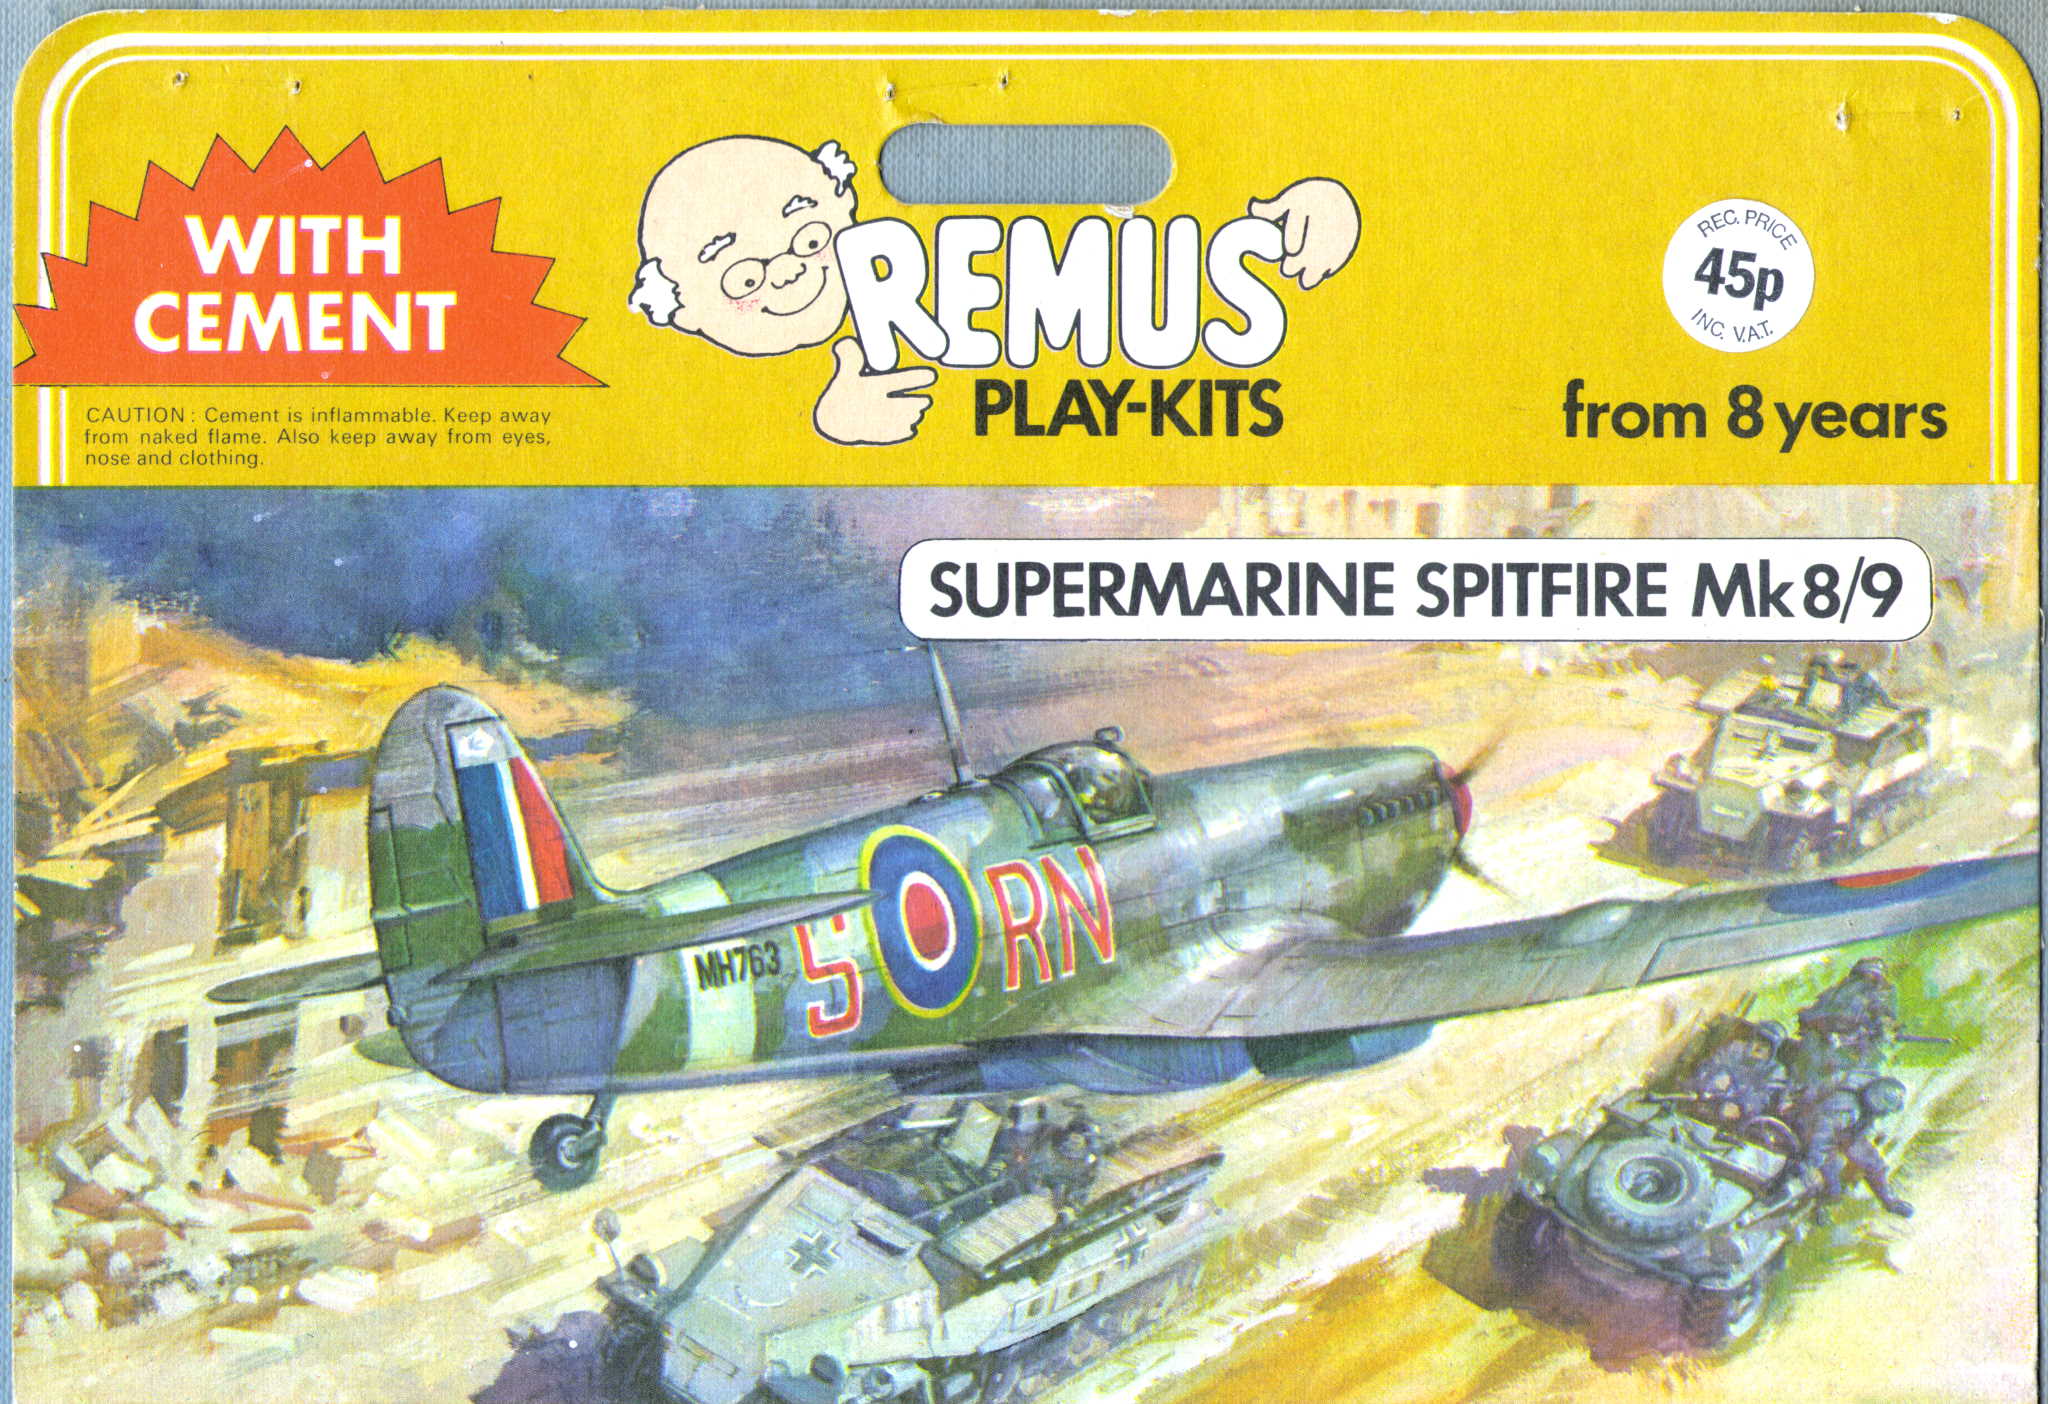 Remus 1016 Supermarine Spitfire Mk.8/9, Remus play-kits, 1975, лепесток